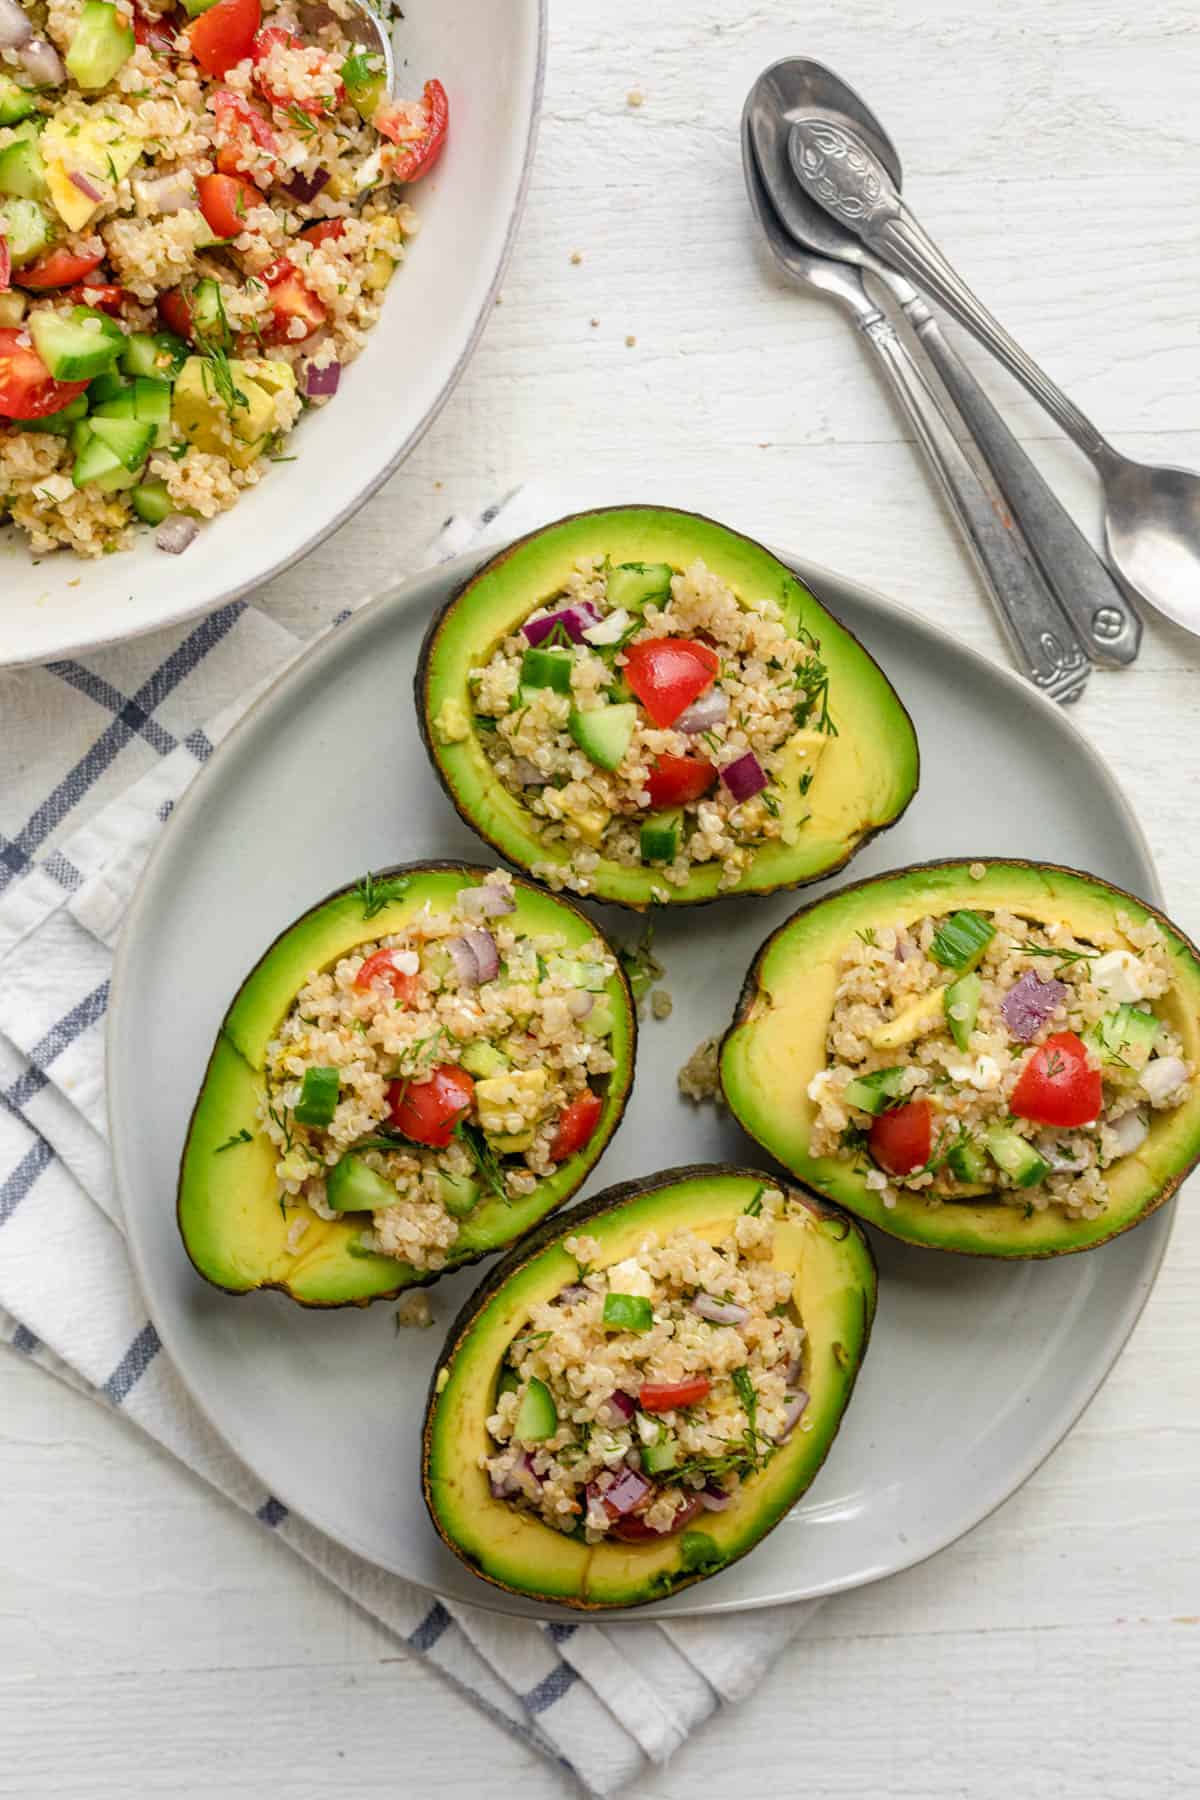 Avocado stuffed quinoa salad with small spoons next to them